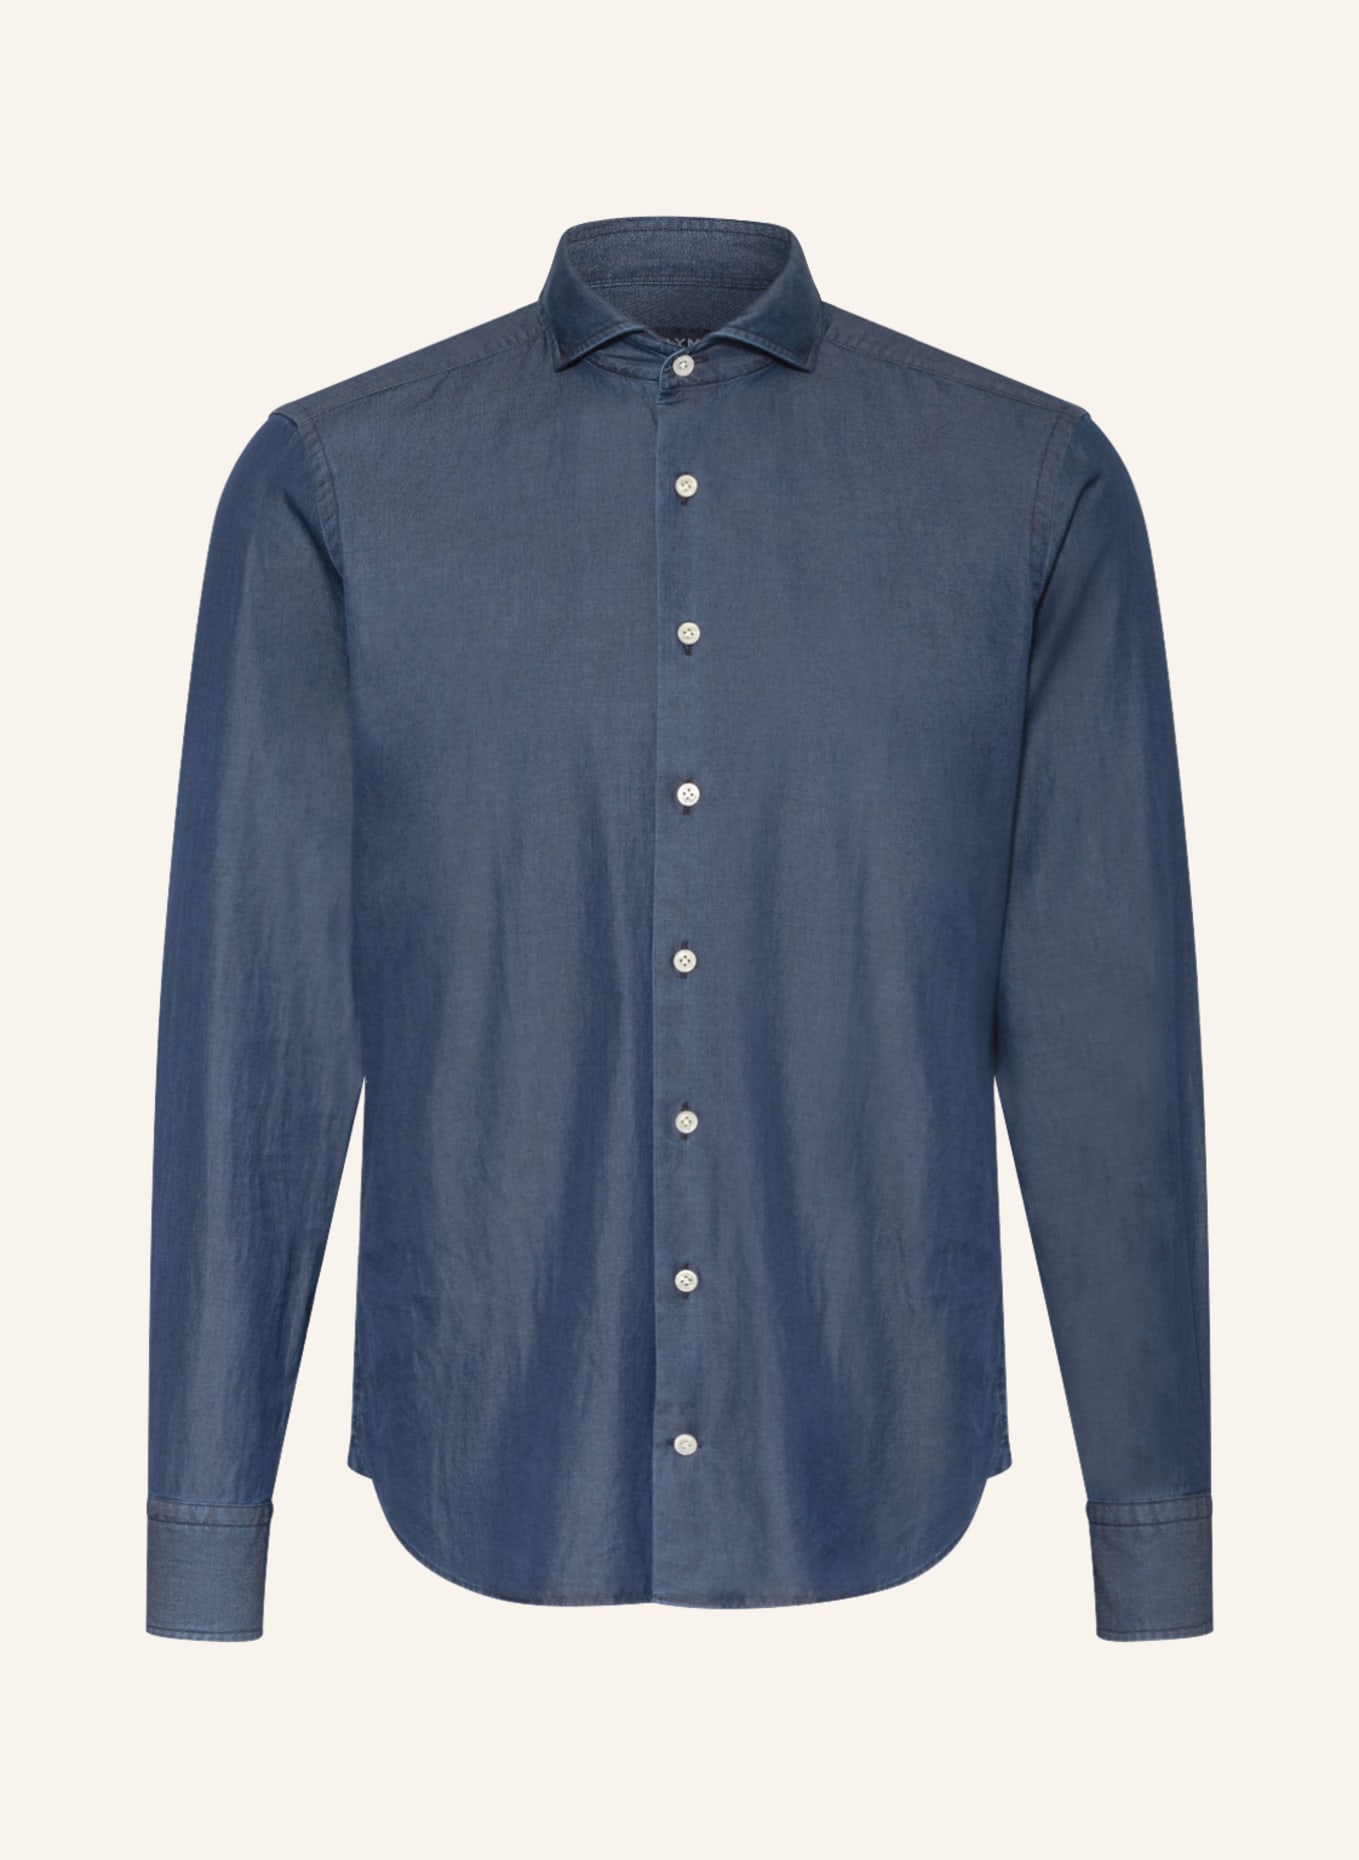 Рубашка OLYMP SIGNATURE tailored fit, темно-синий